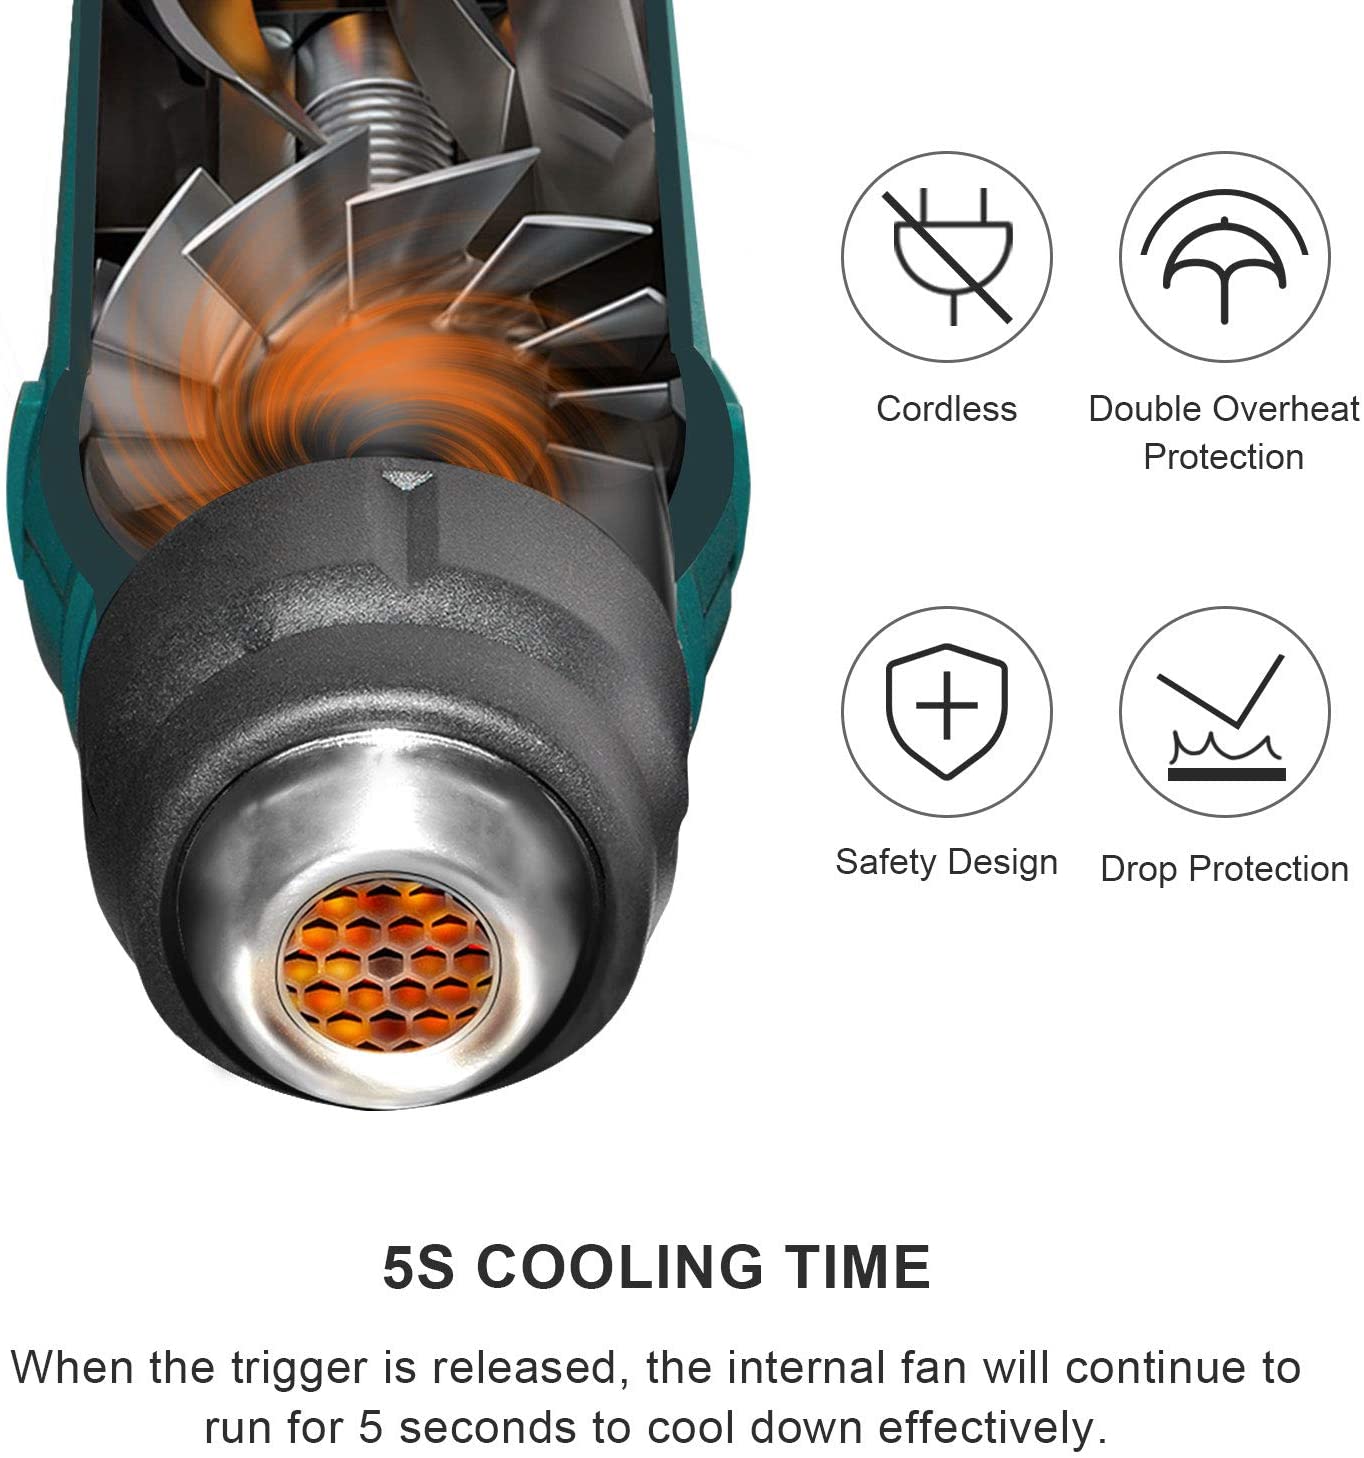 HG0050-18 Cordless Heat Gun